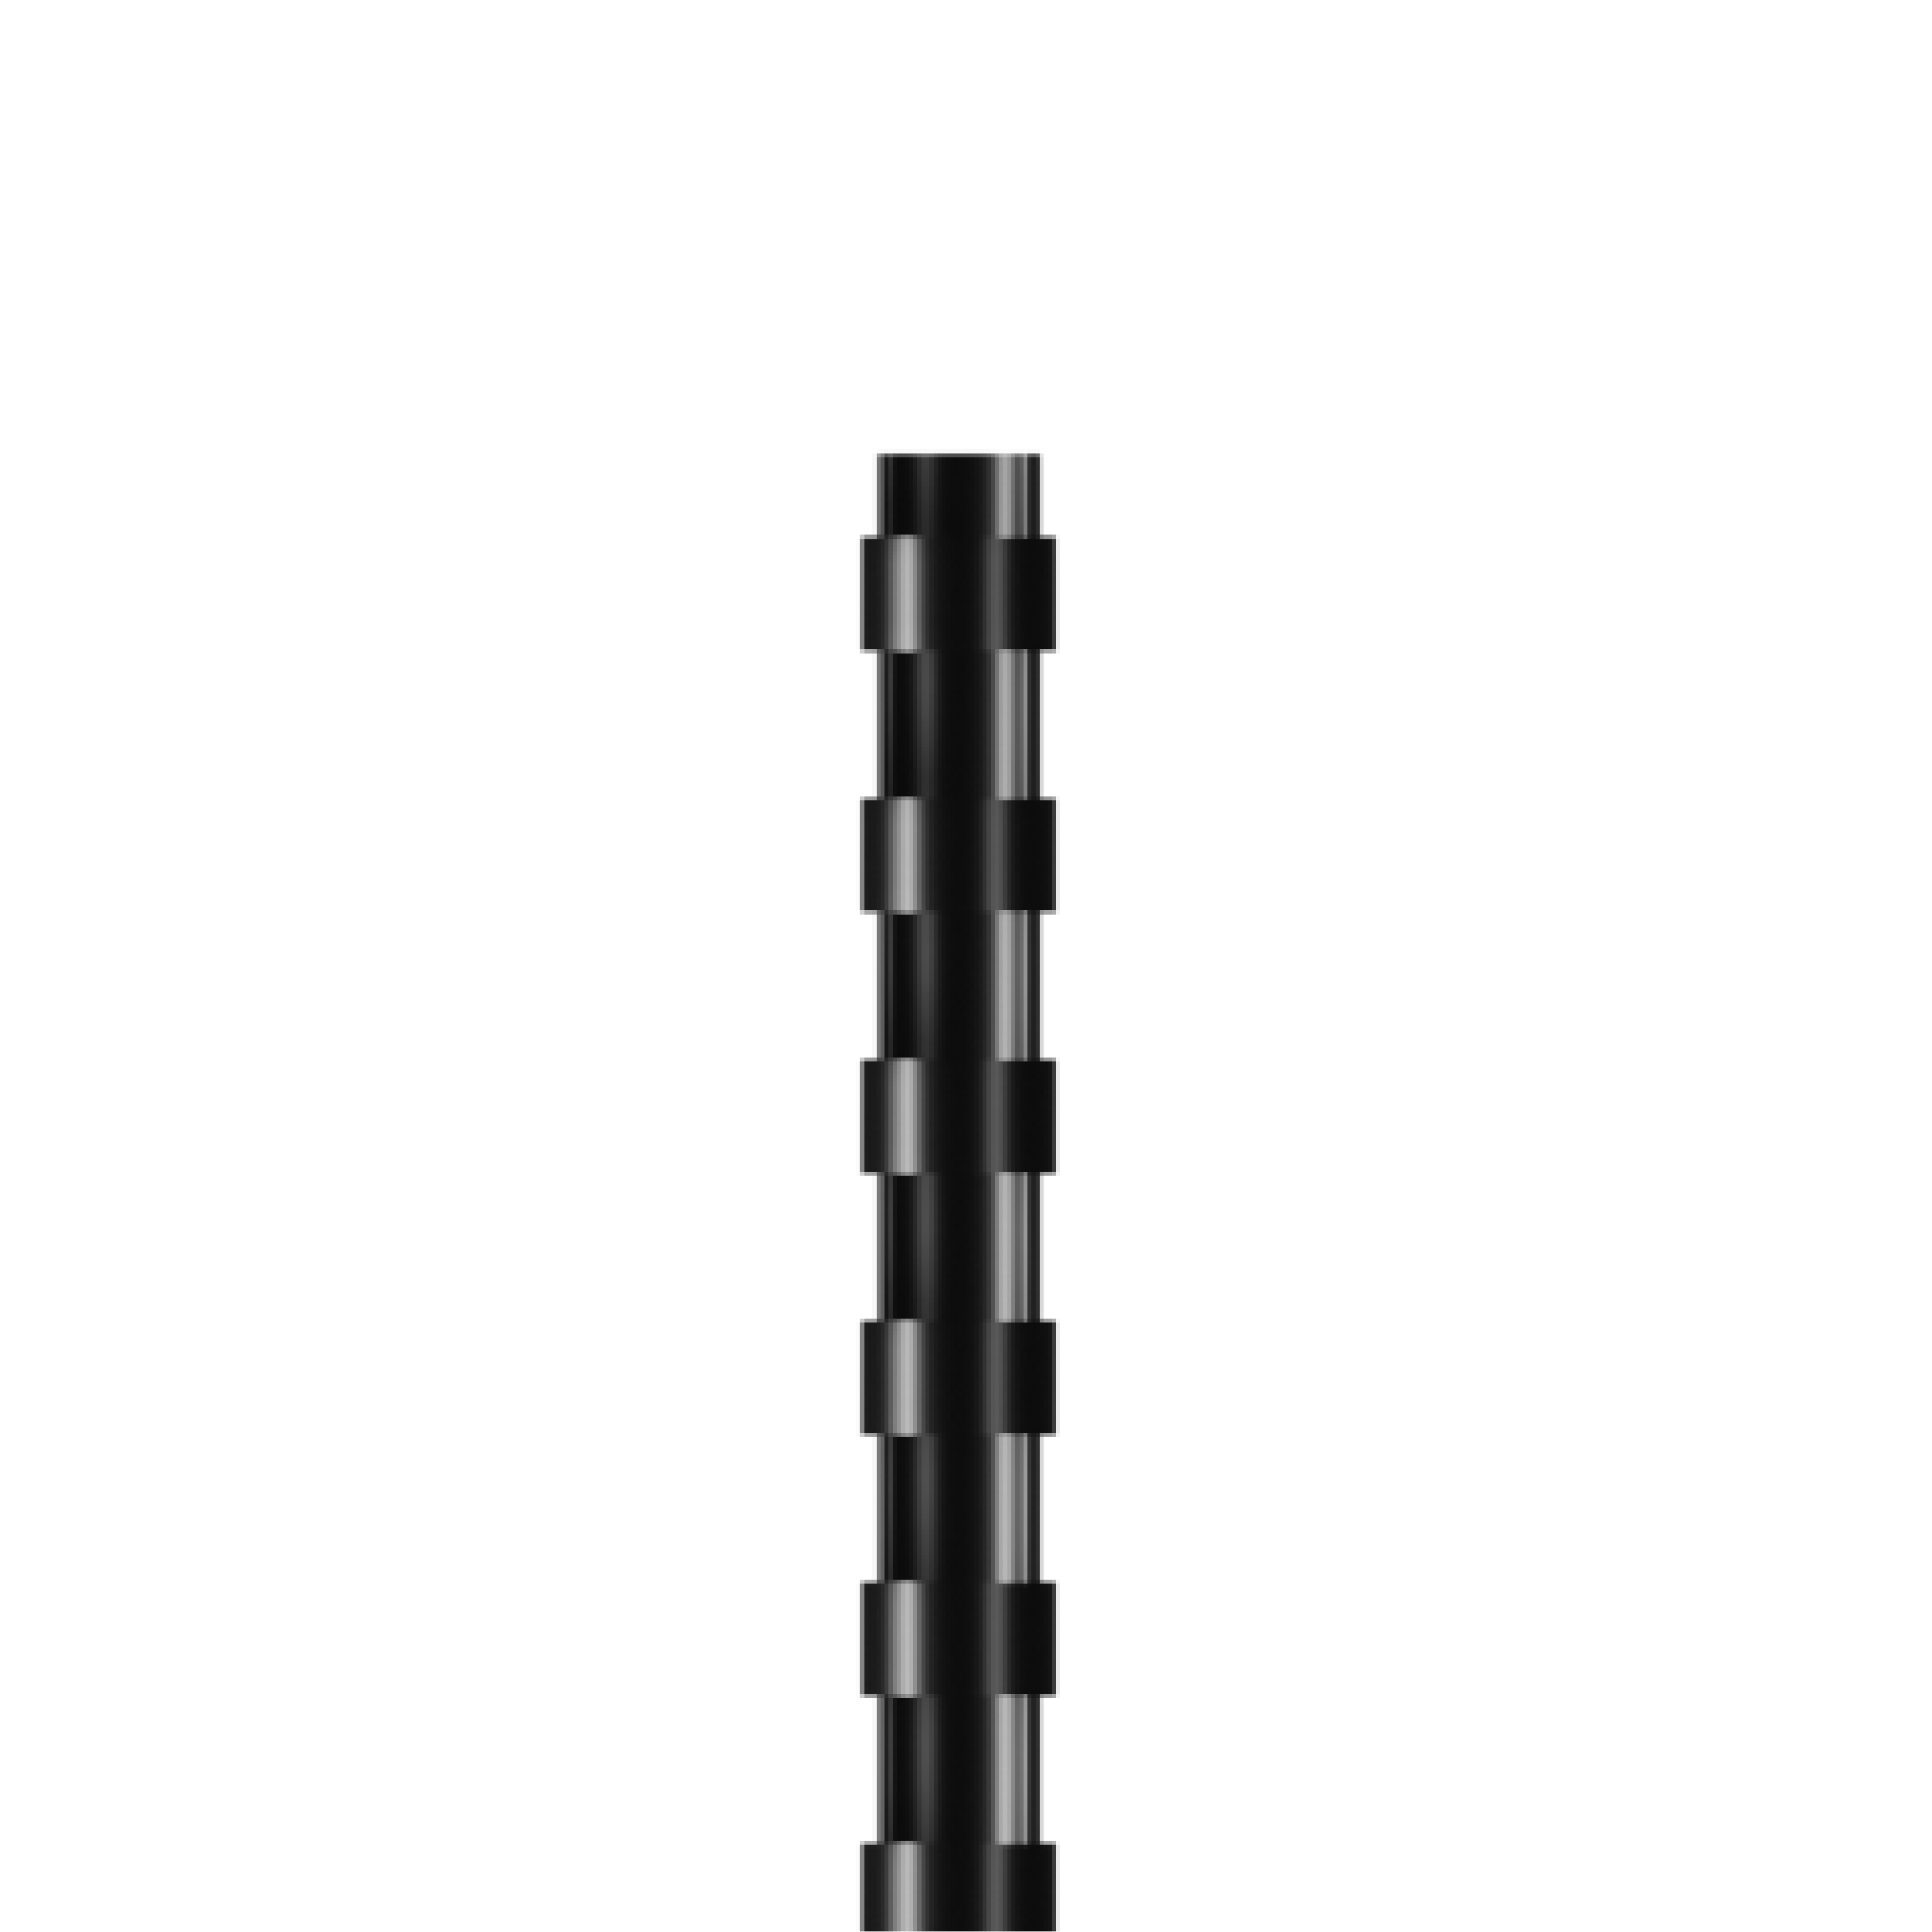 RAADO 10mm Plastic Spiral Binding Comb, Black